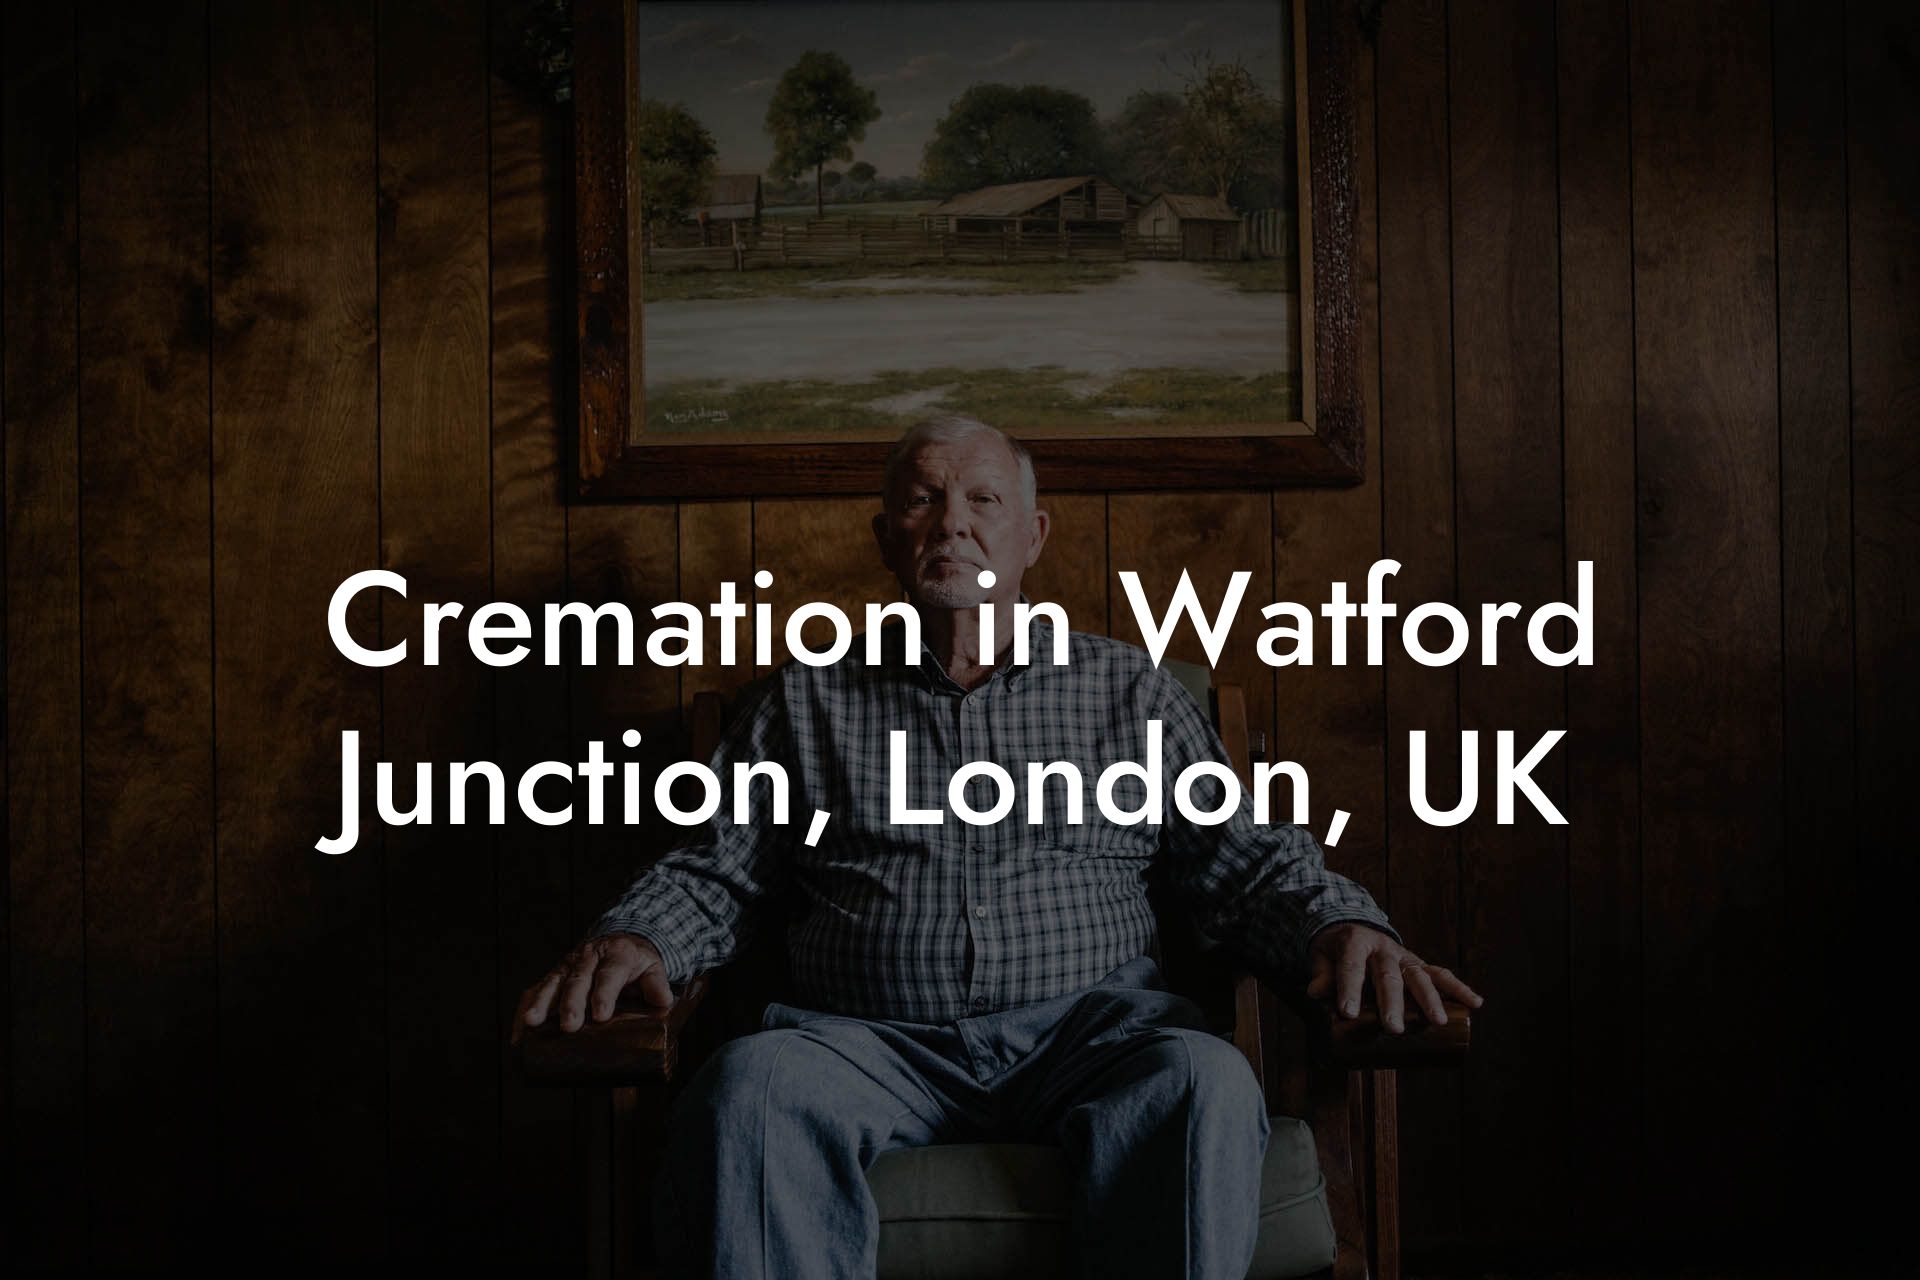 Cremation in Watford Junction, London, UK